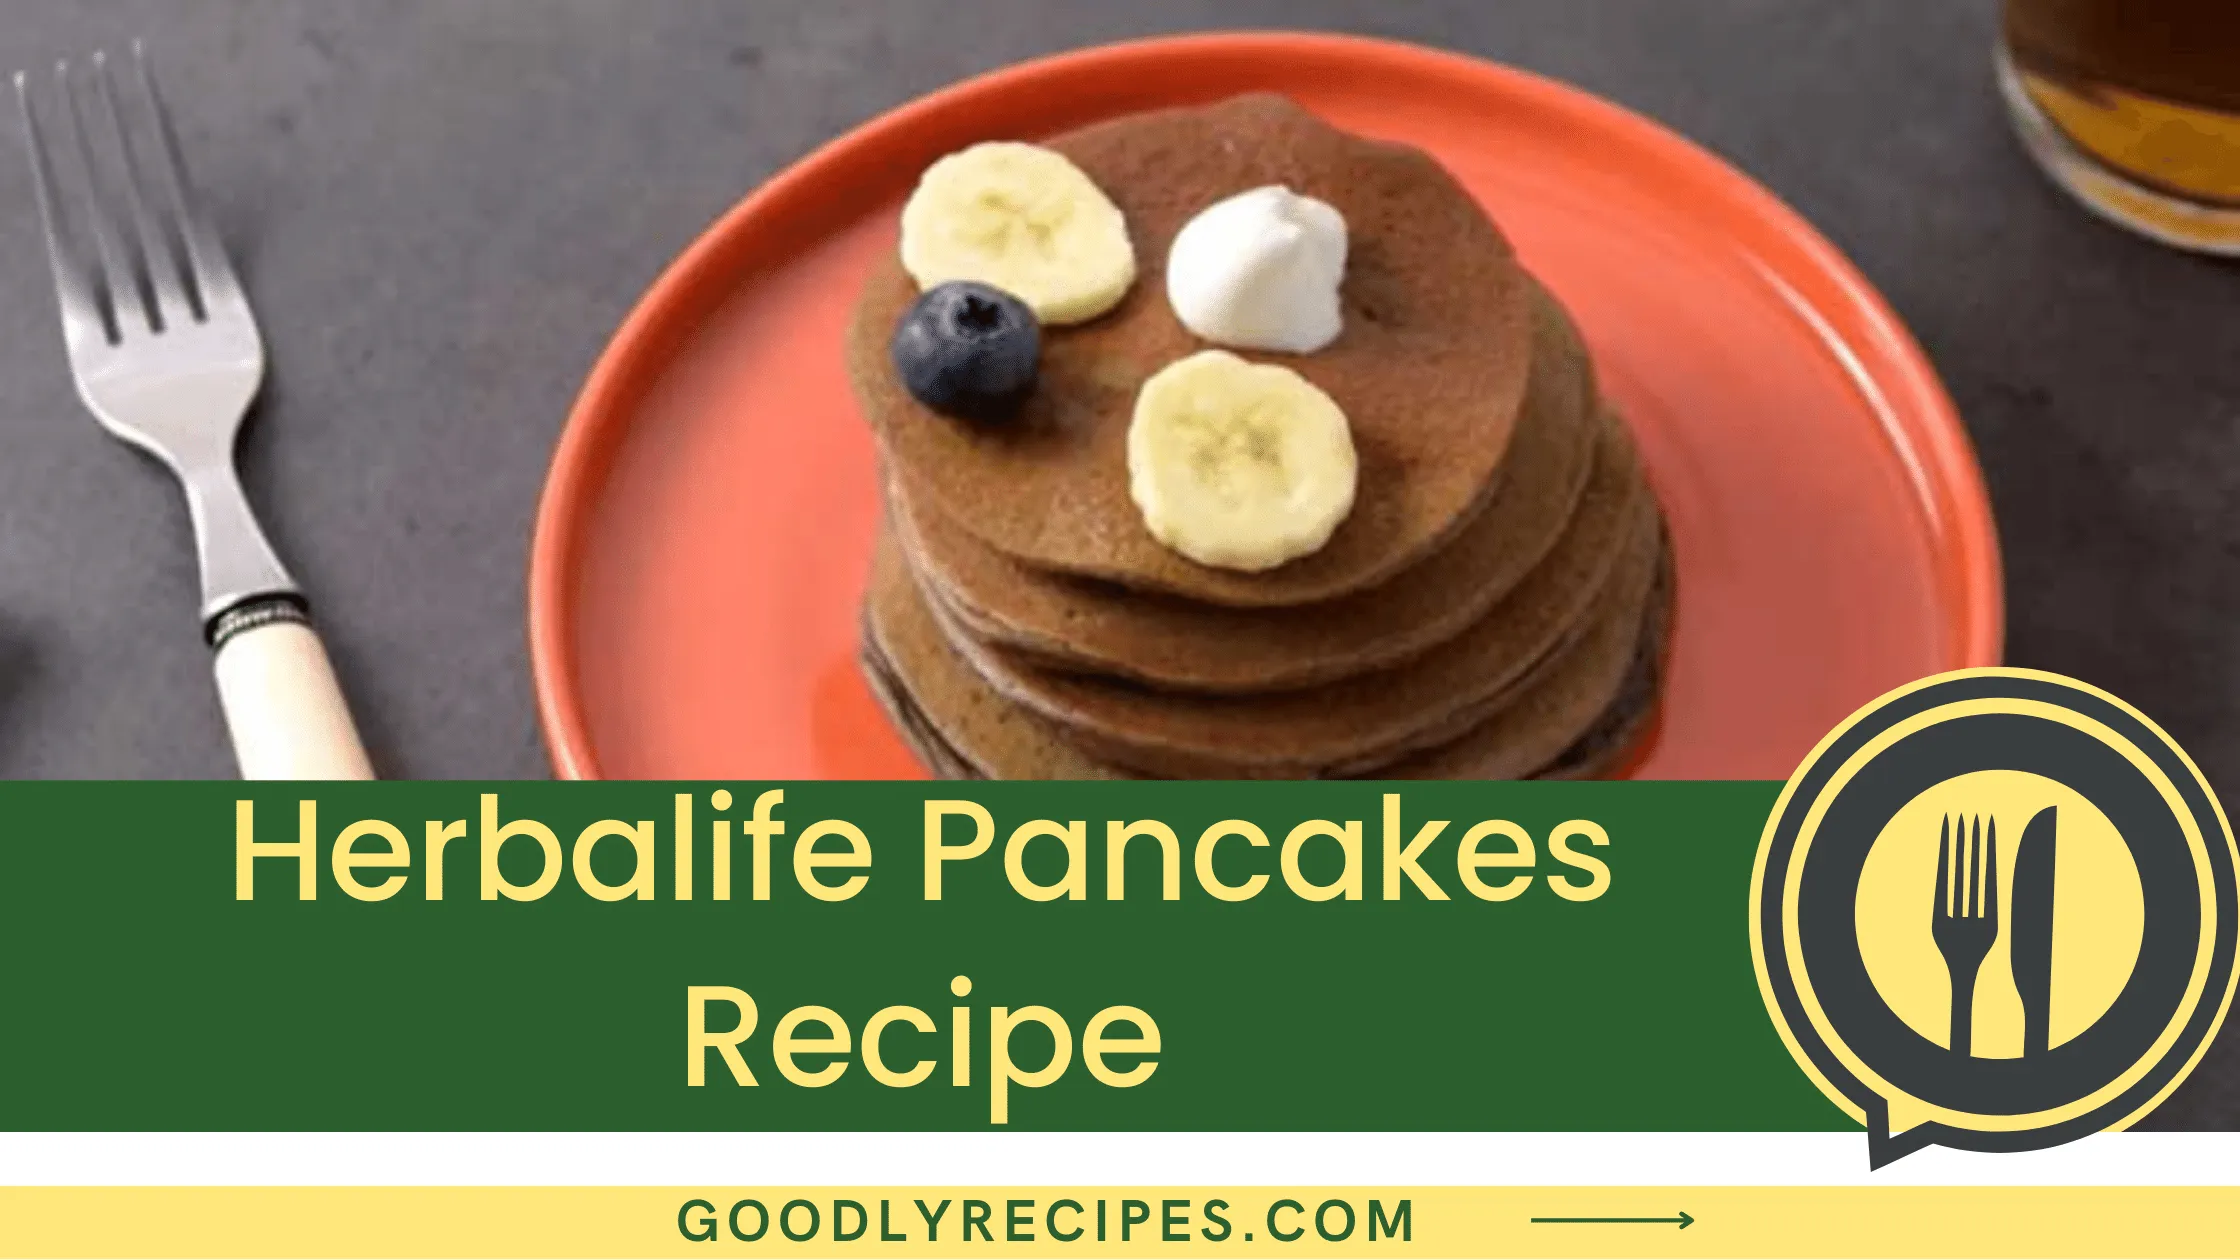 Herbalife Pancakes Recipe